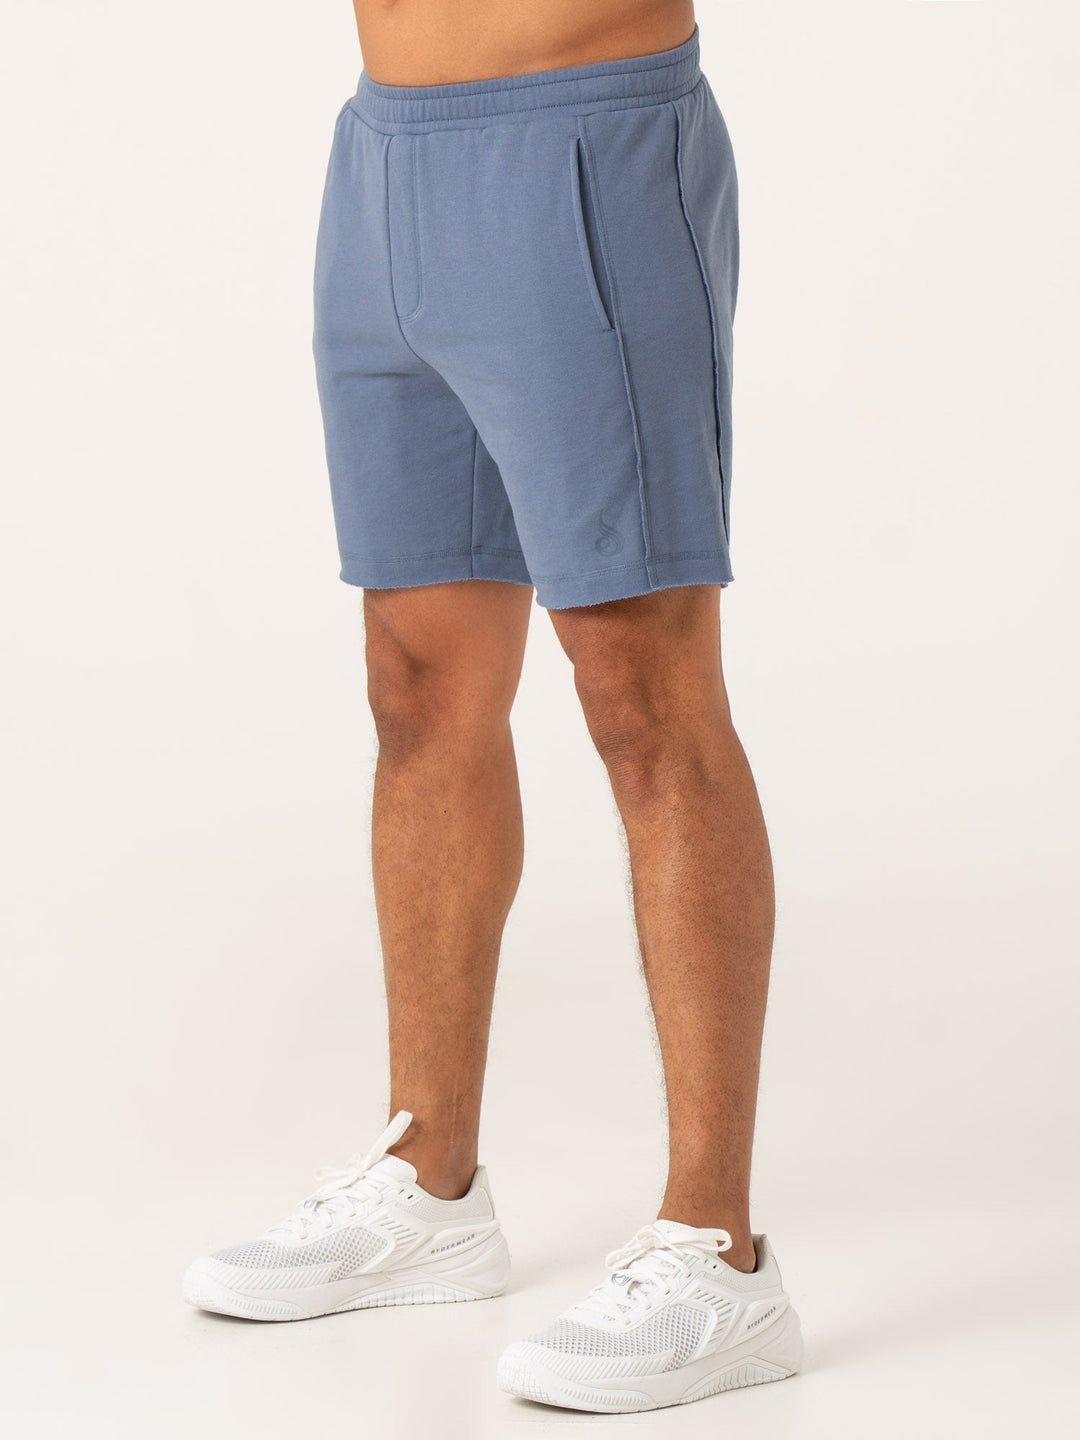 Pursuit Track Shorts - Denim Blue Clothing Ryderwear 